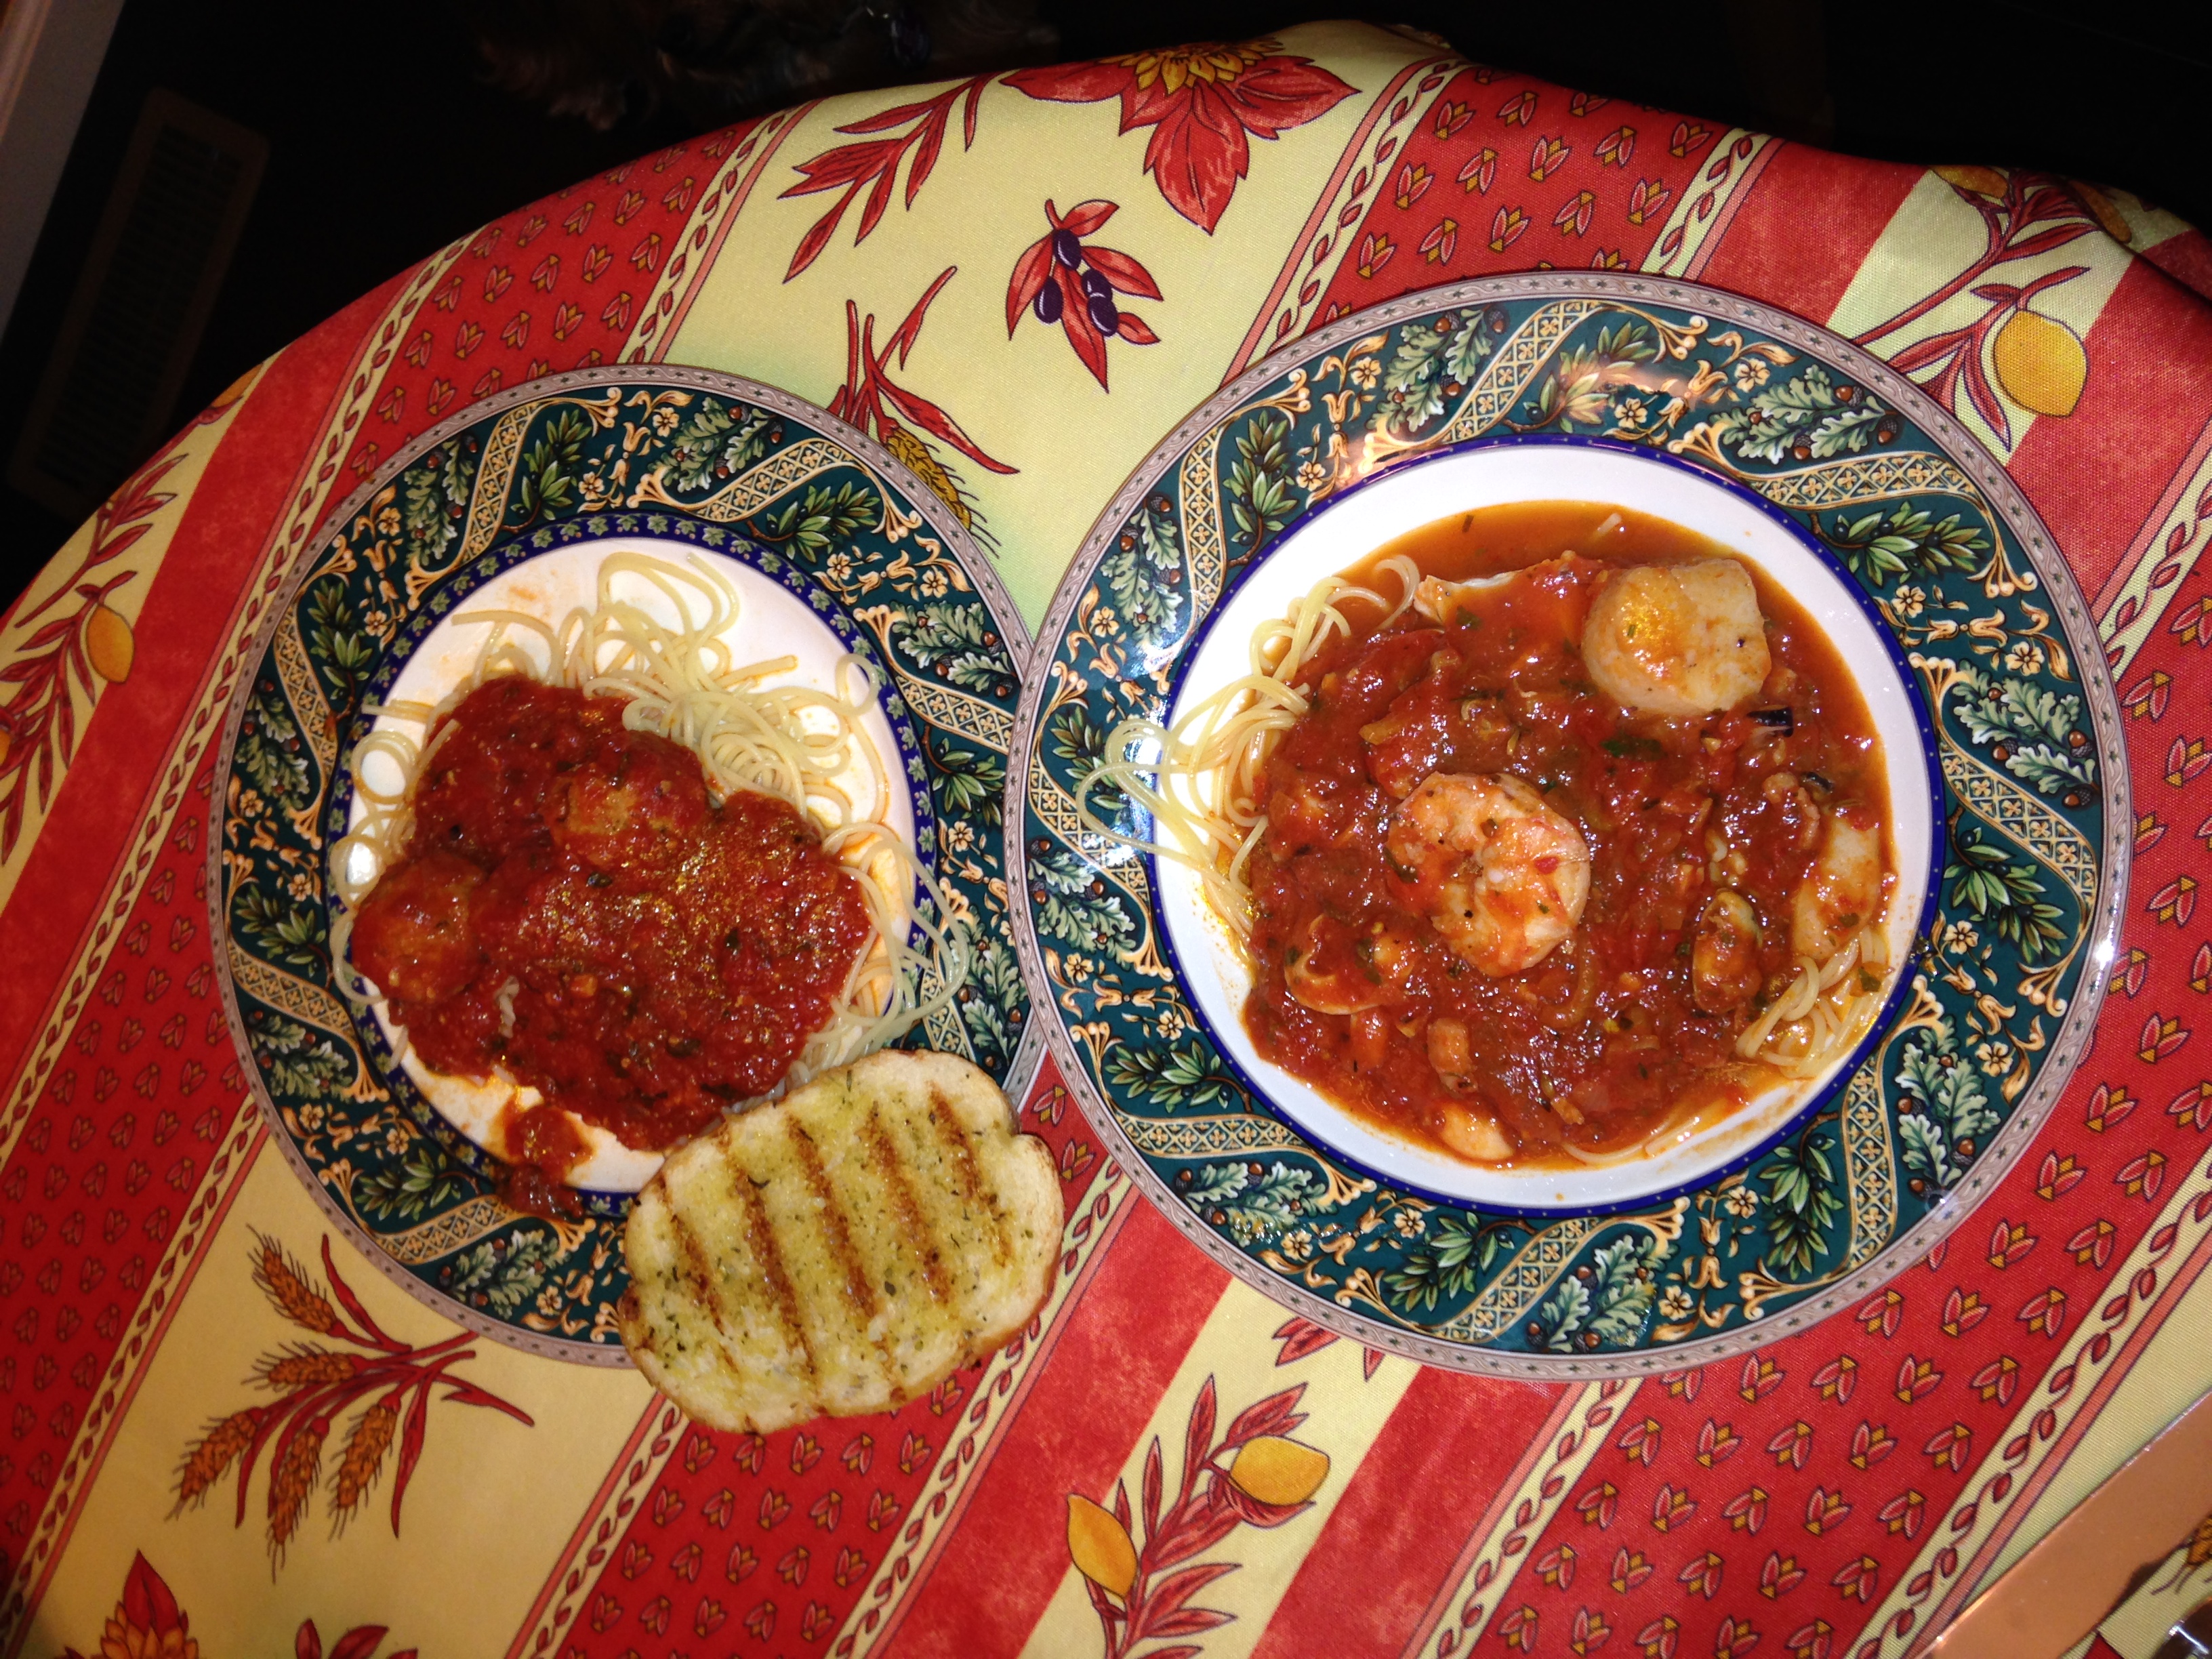 Bowl of Cioppino, Garlic Bread and Turkey Meatballs with Marinara Sauce